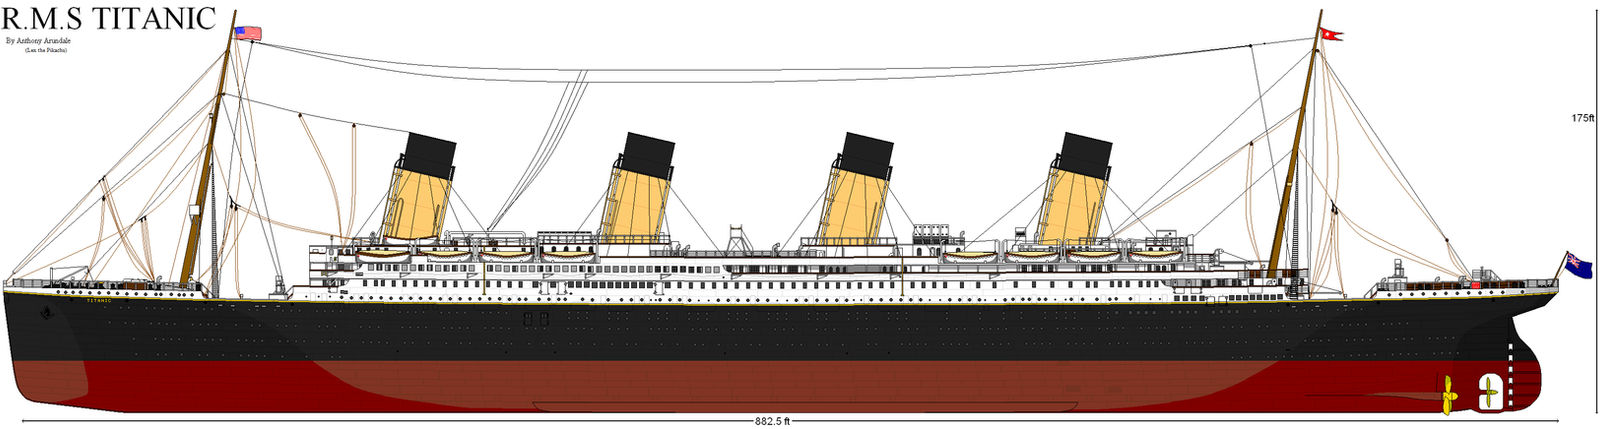 RMS Titanic 'Port Side' by Lex-the-Pikachu on DeviantArt